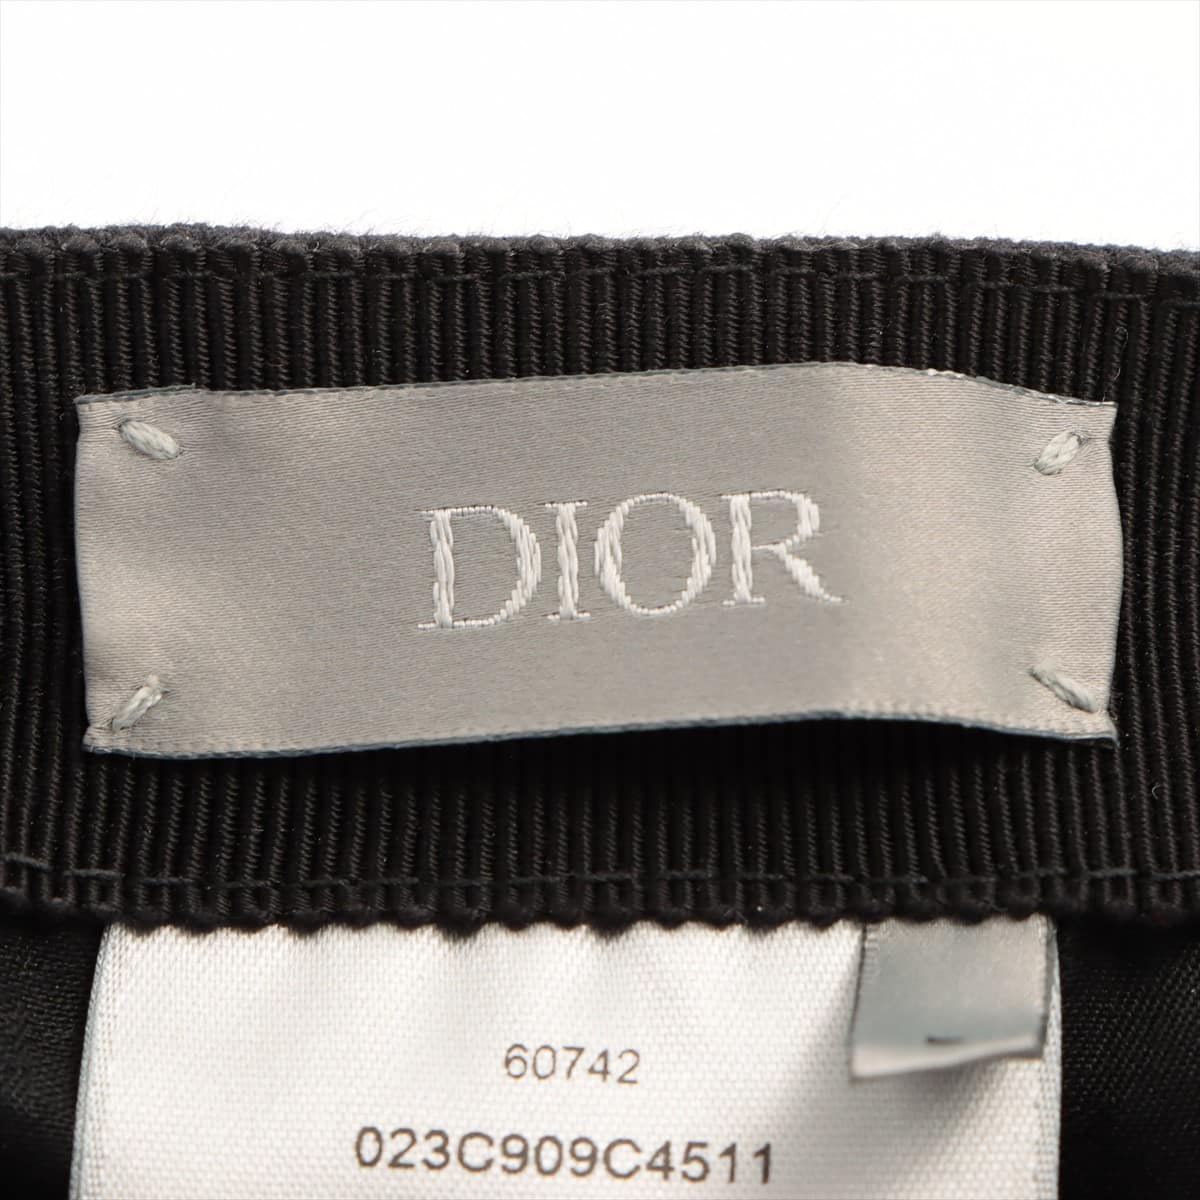 Christian Dior Logo Cap L Cotton Black